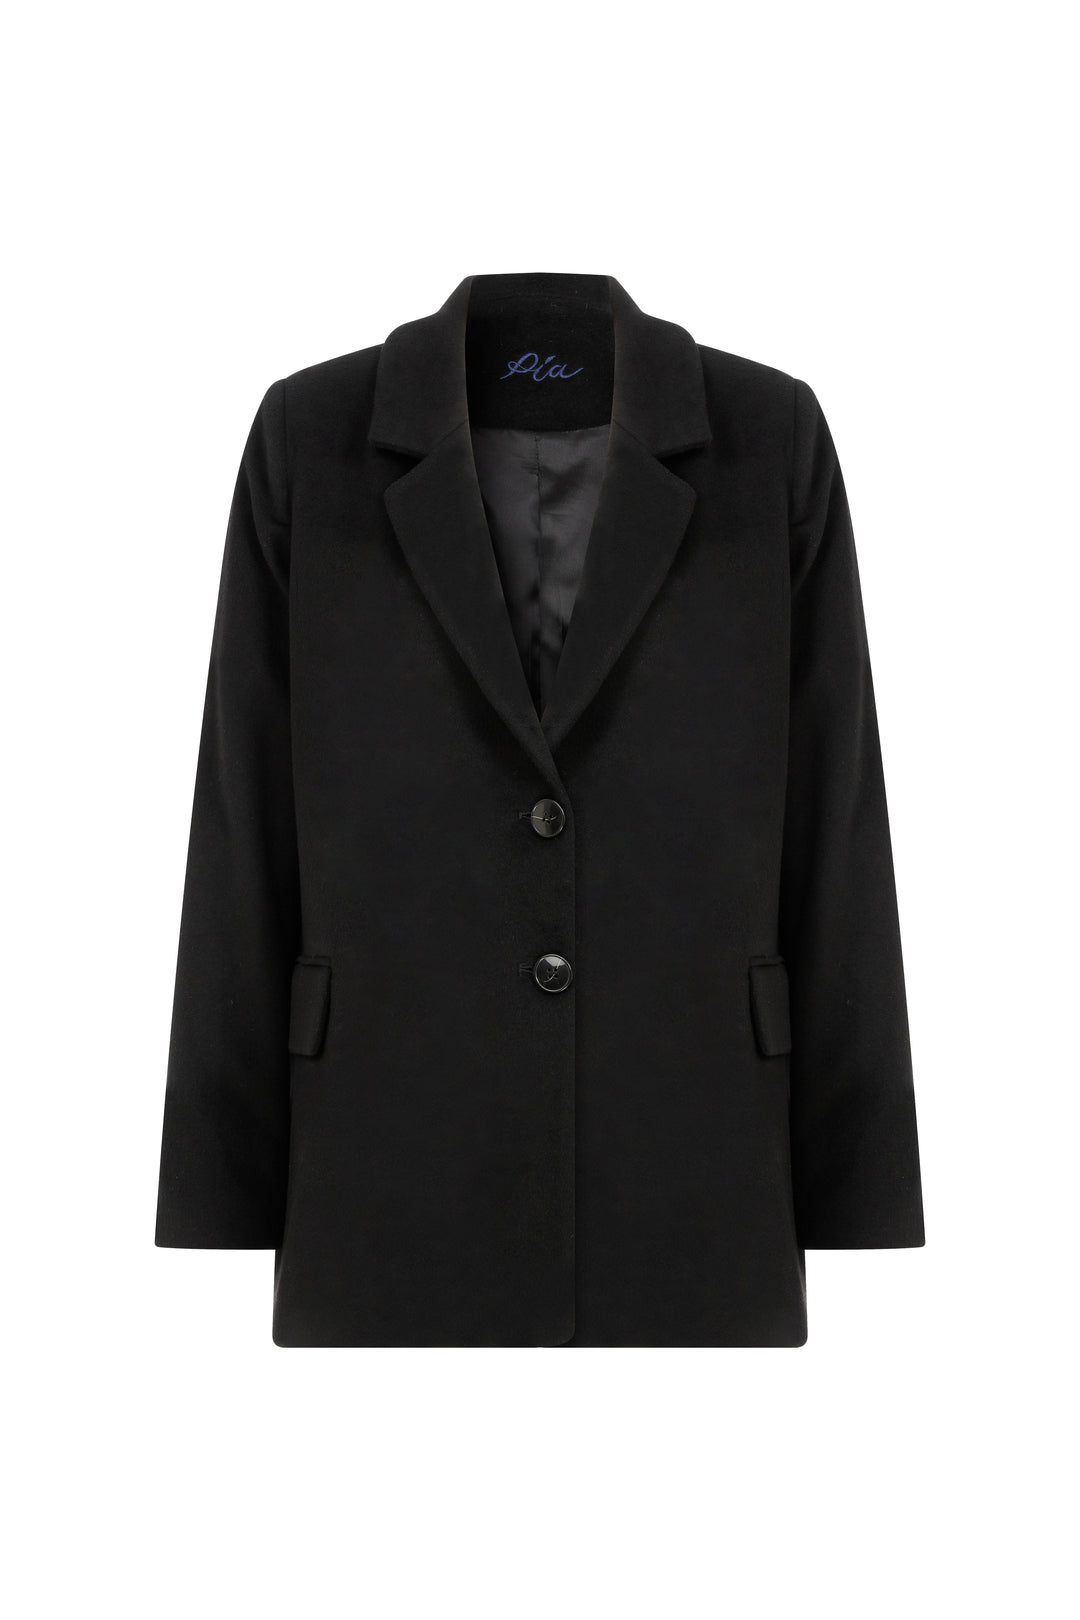 Charlie - Black Oversized Wool Blazer Jacket